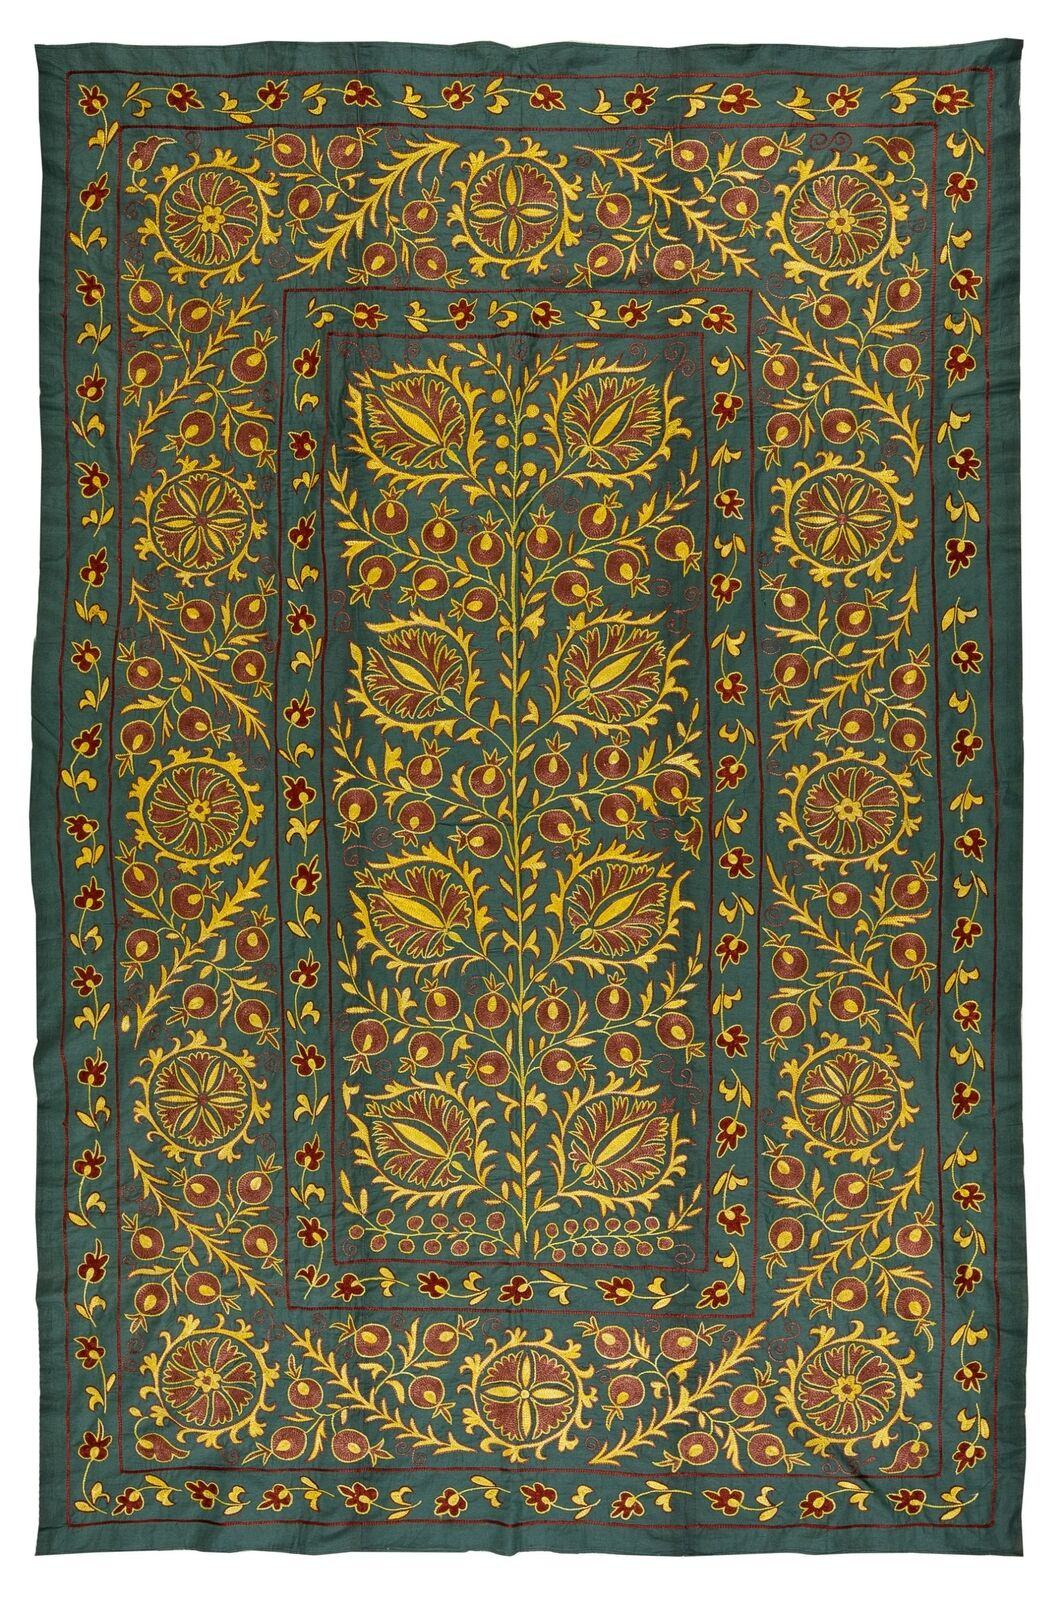 4.6x7 Ft Brand New Uzbek Suzani Textile. Embroidered Silk & Cotton Wall Hanging